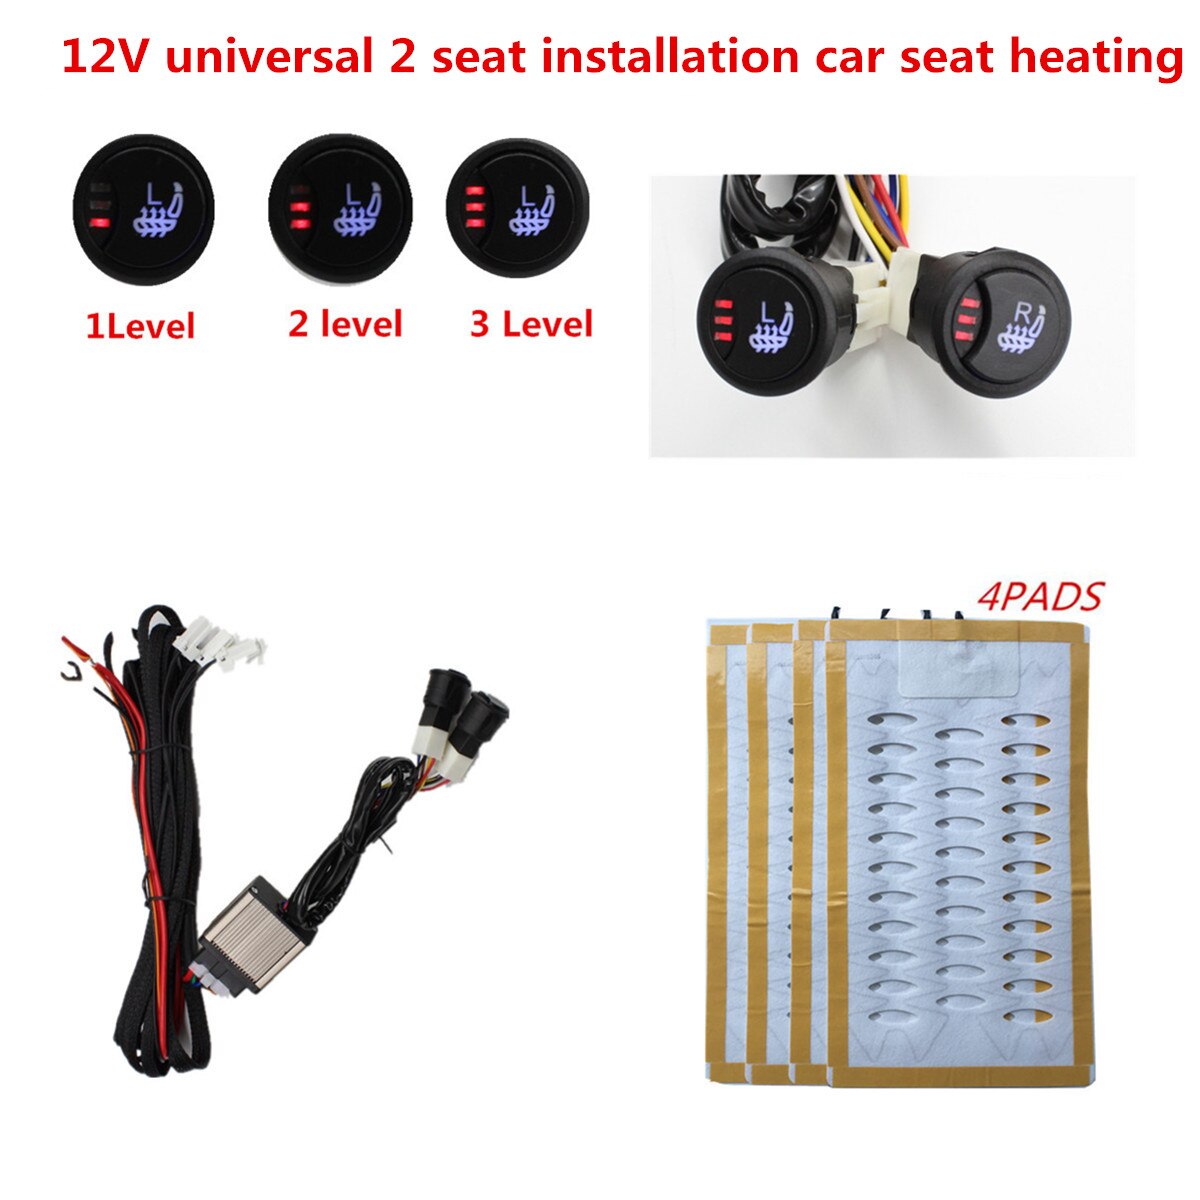 12V Legering Draad Stoelverwarming Voor Auto Suv Heater Pads + 3 Niveau Schakelaar Knop Interieur Bekleding Heater warmer Ondersteuning